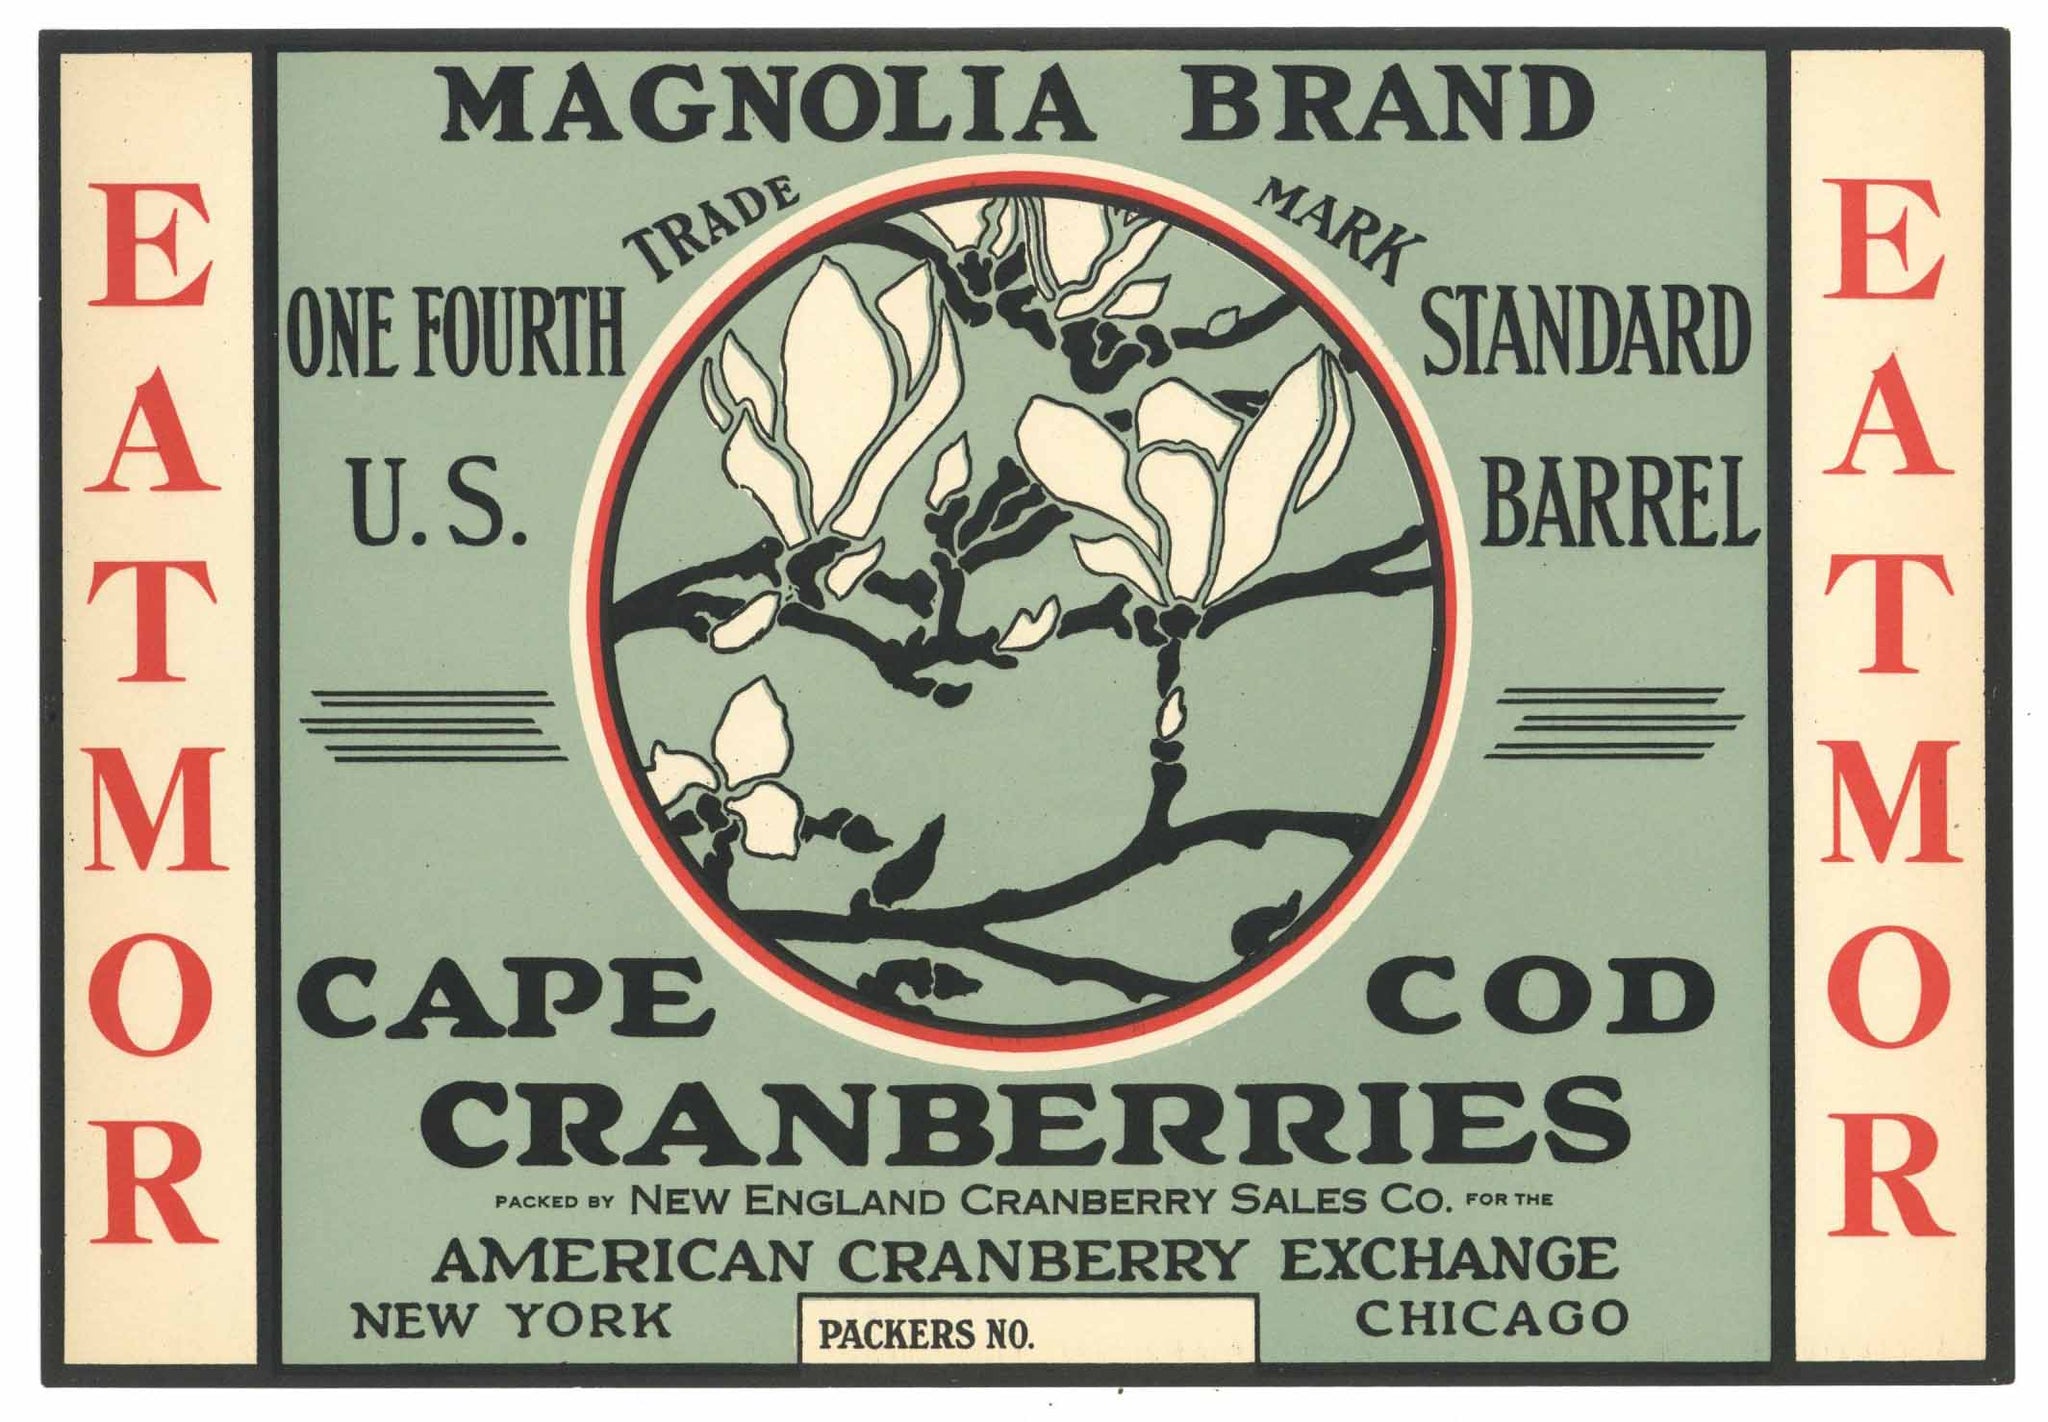 Magnolia Brand Vintage Cape Cod Cranberry Crate Label, 1/4